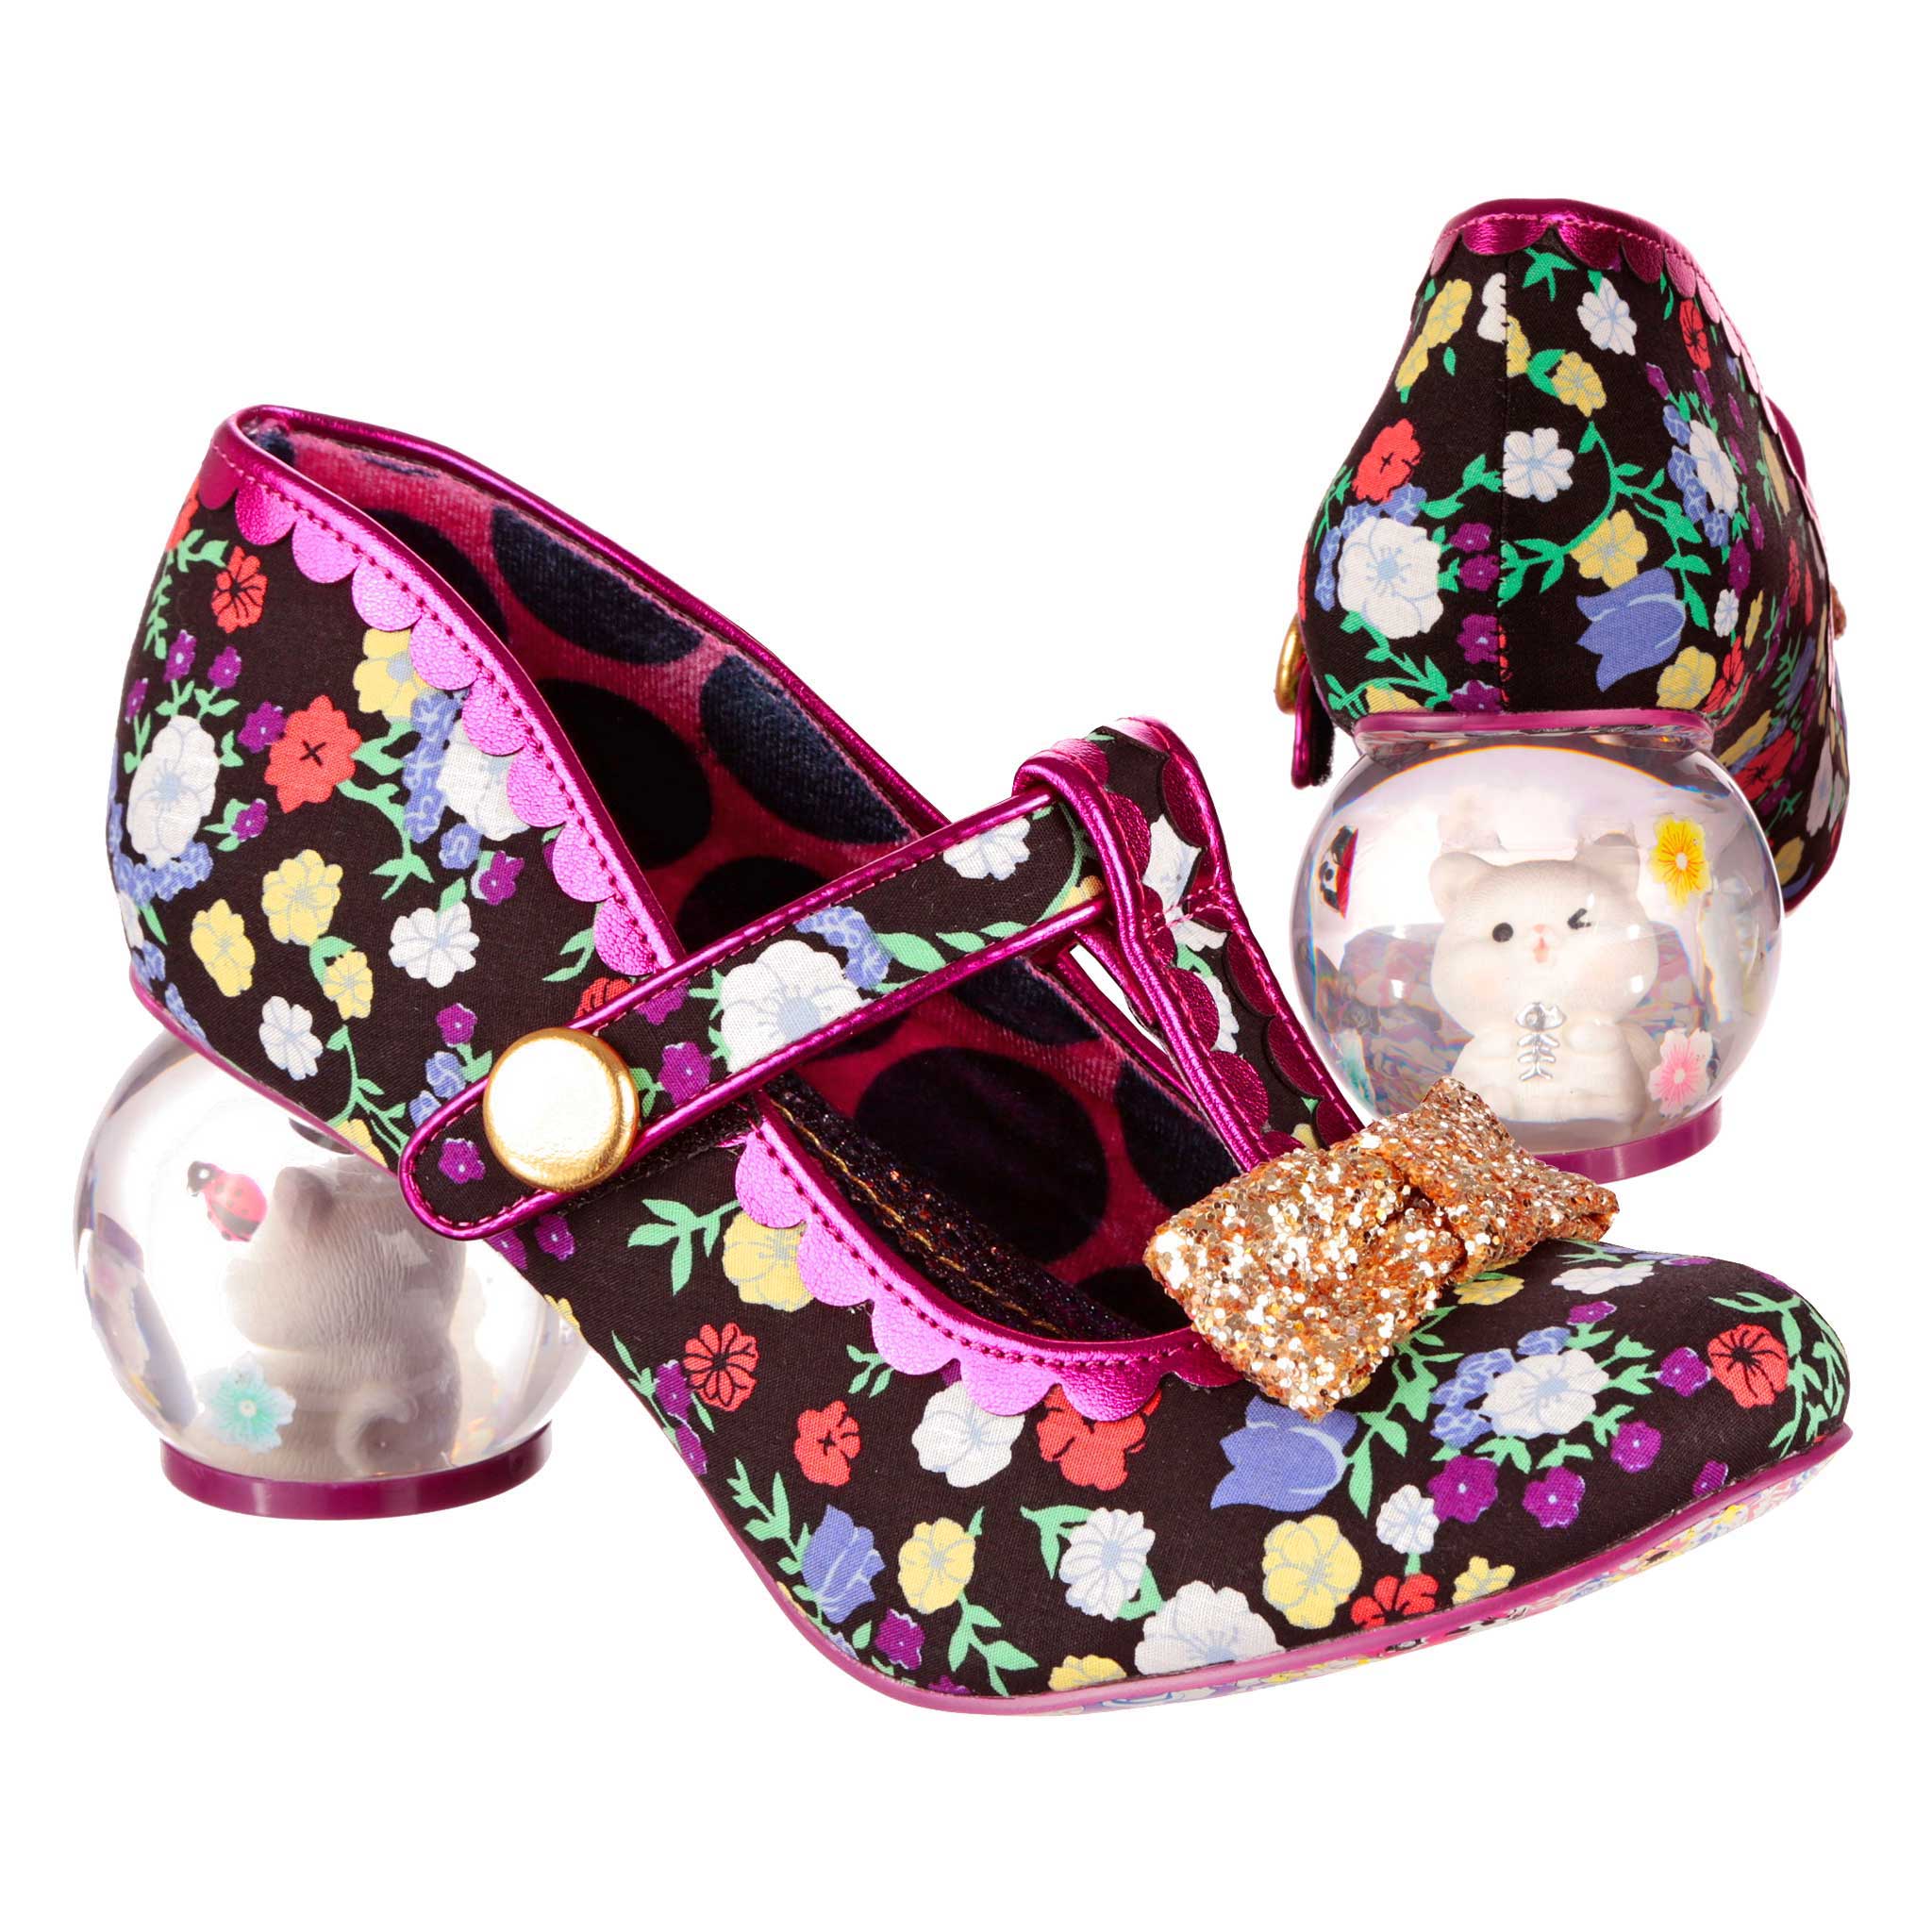 Irregular Choice Hello Kitty shoes size 45 UK (12-13 US) New